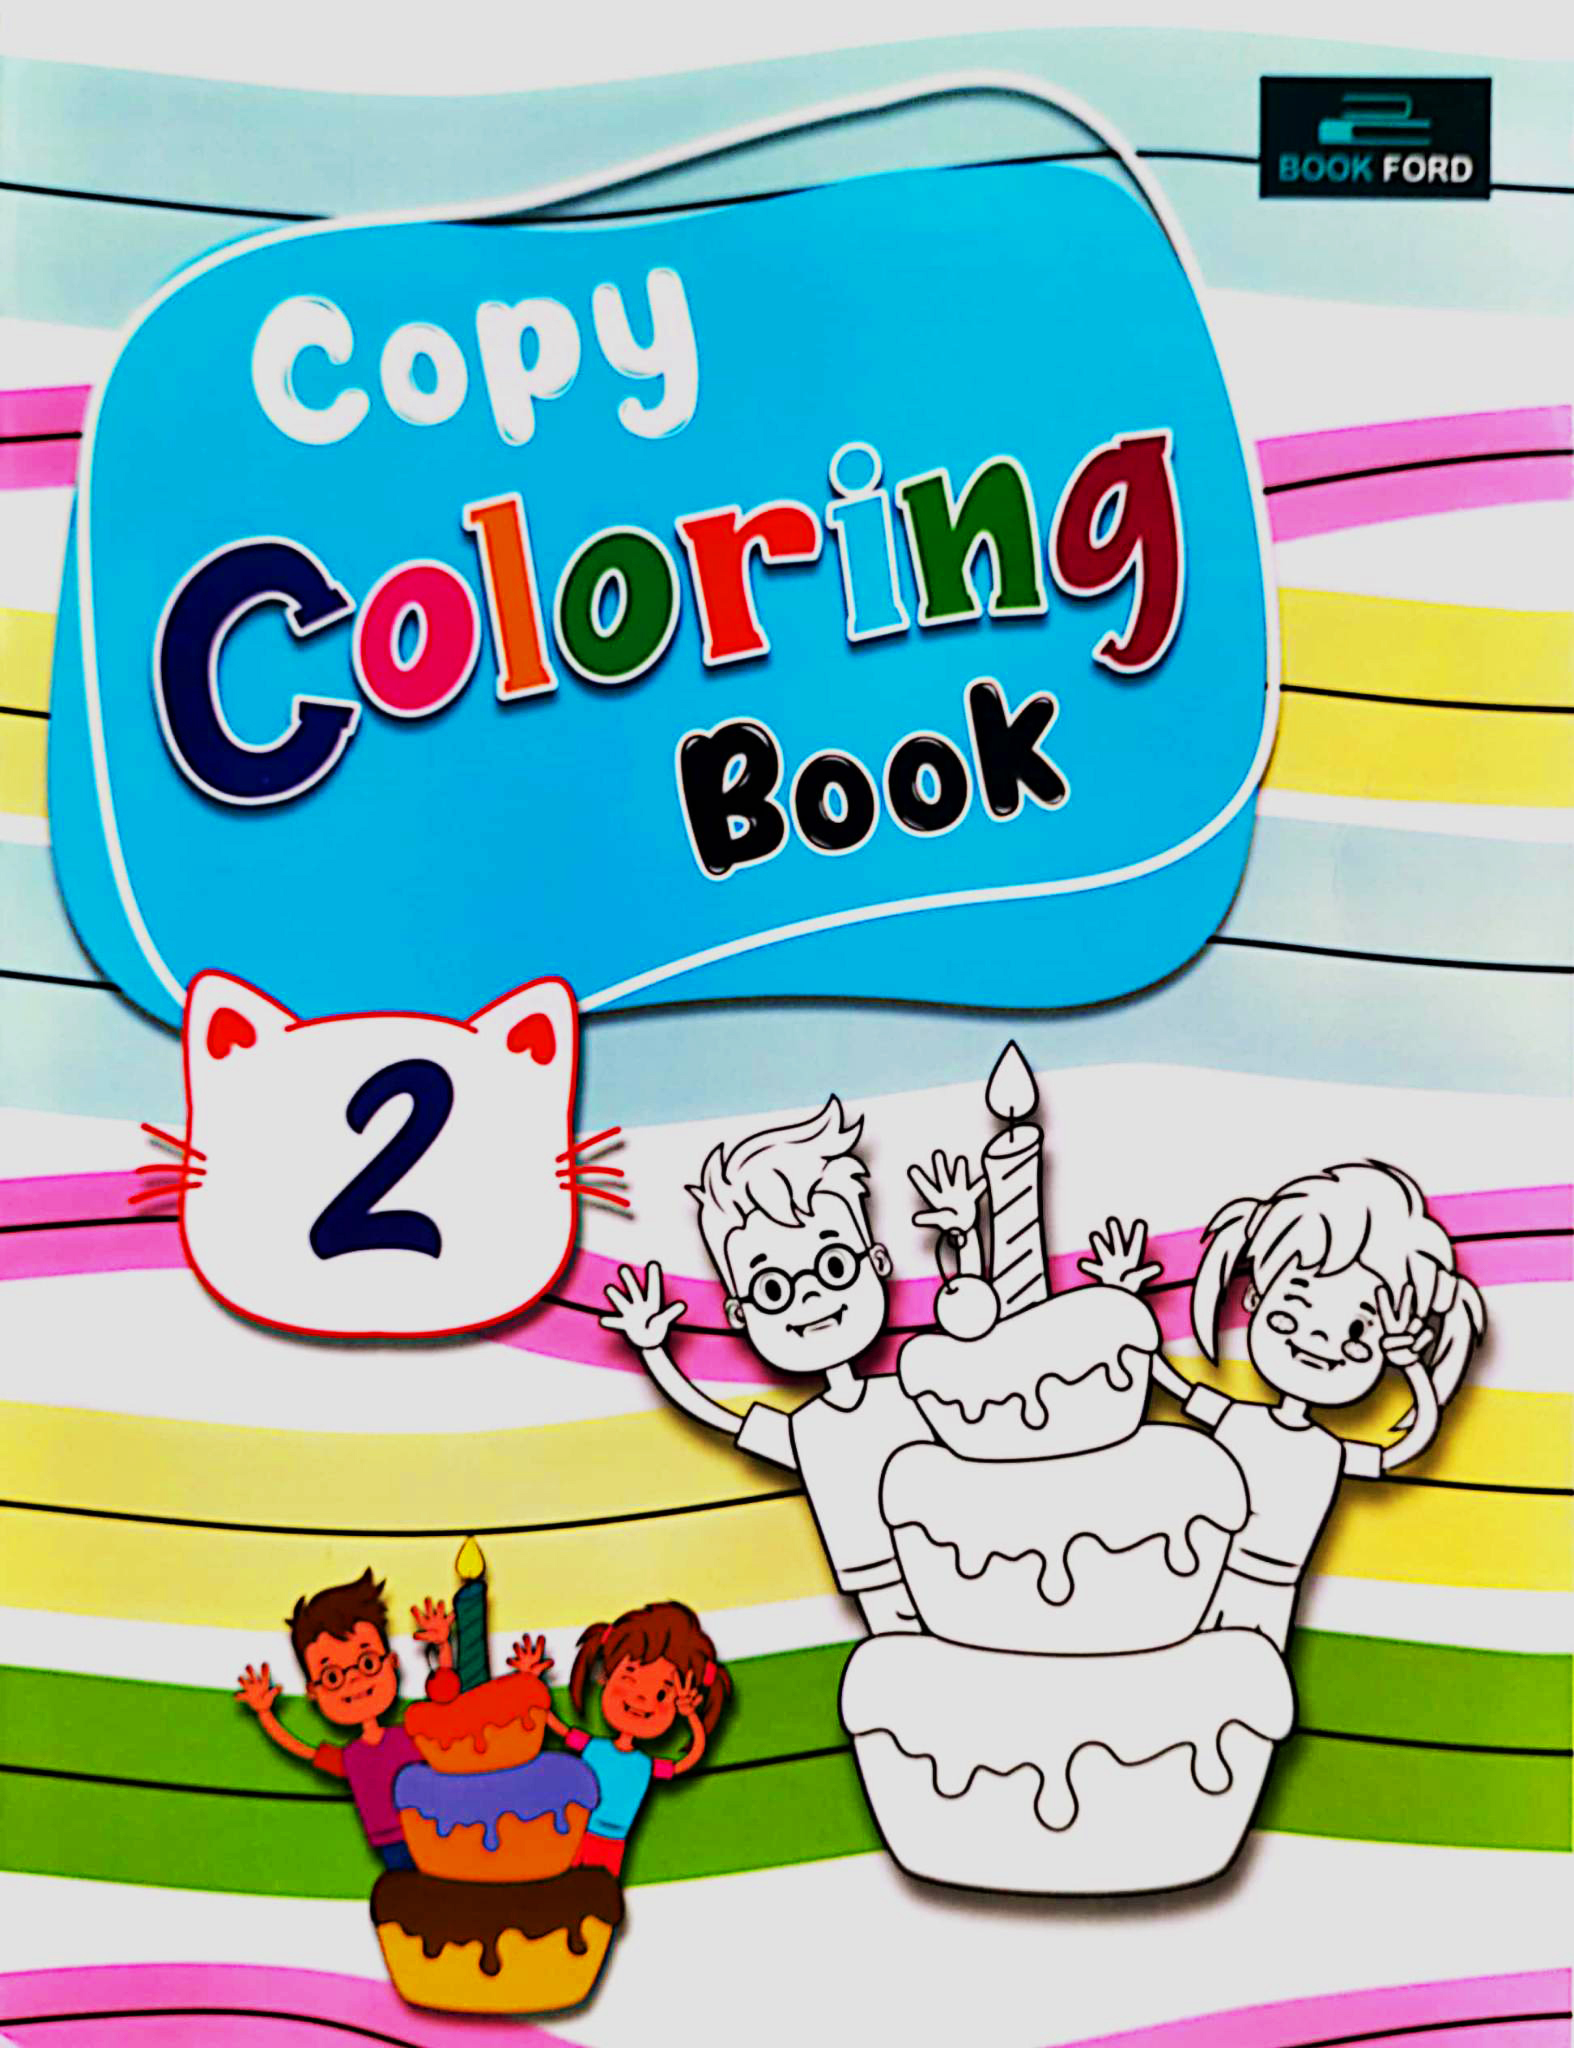 Copy Coloring Book 2 (পেপারব্যাক)